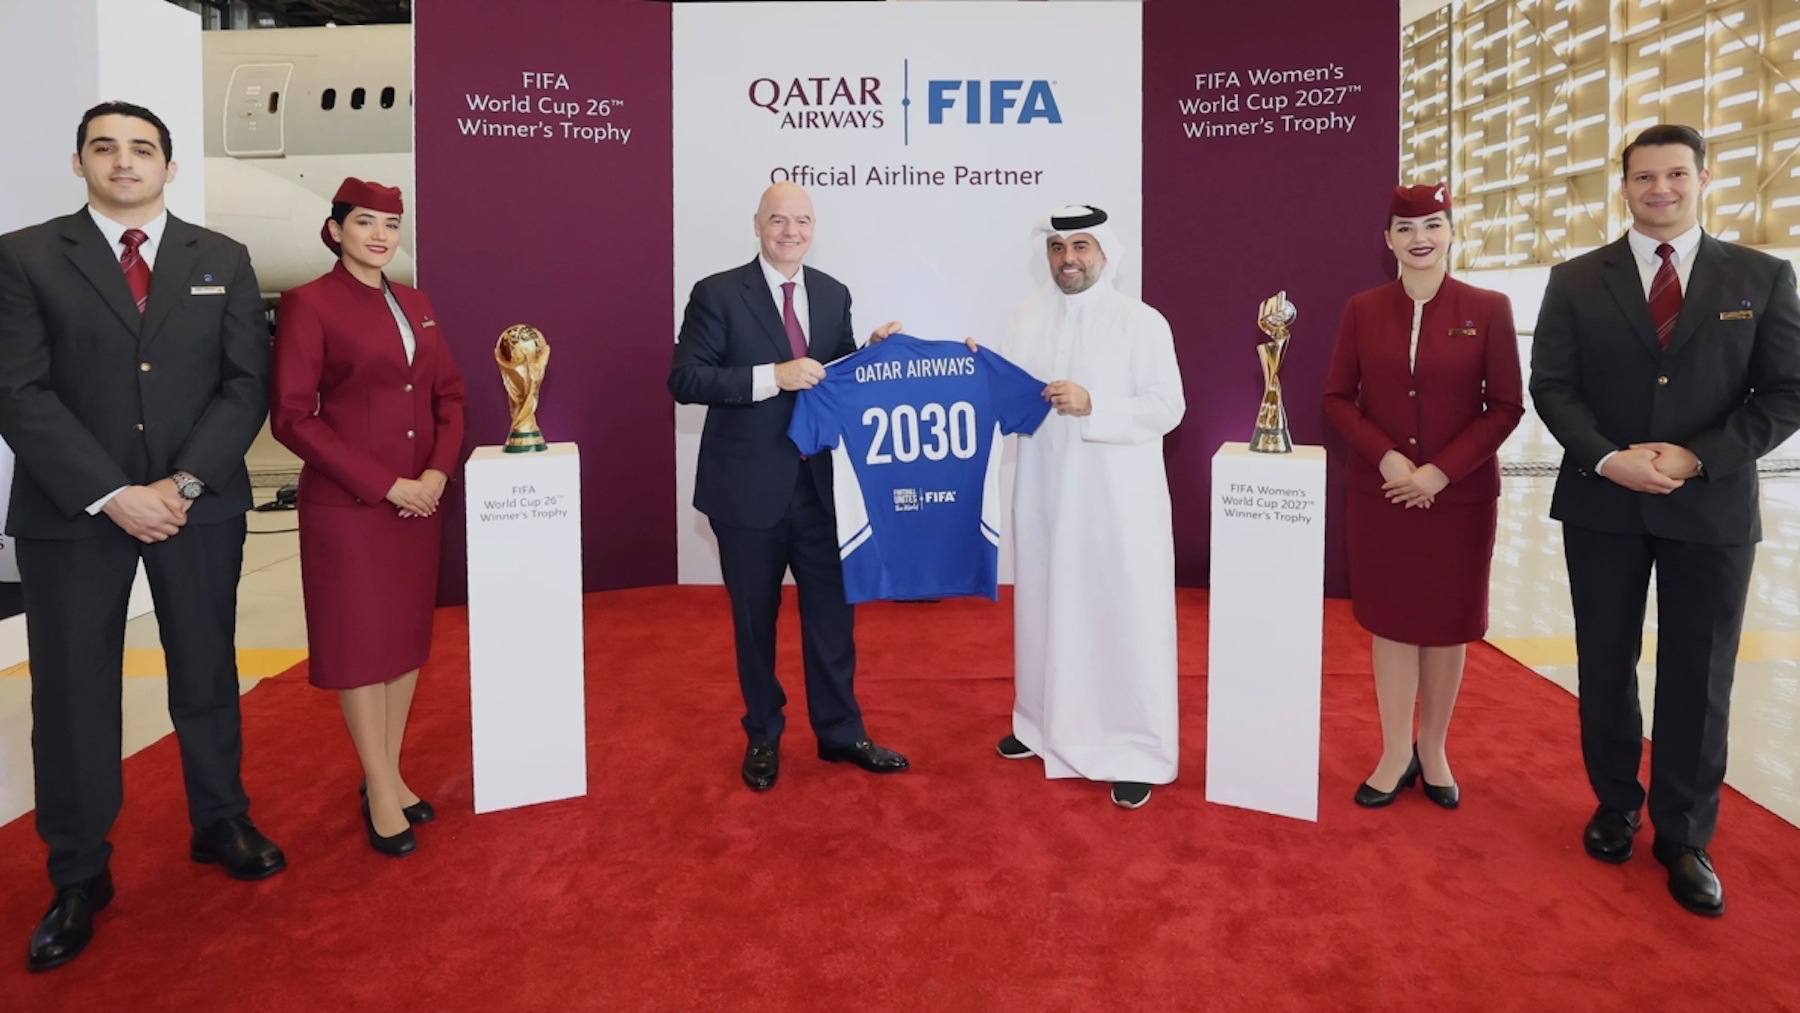 Gianni Infantino anuncia el acuerdo con Qatar Airways. (FIFA)